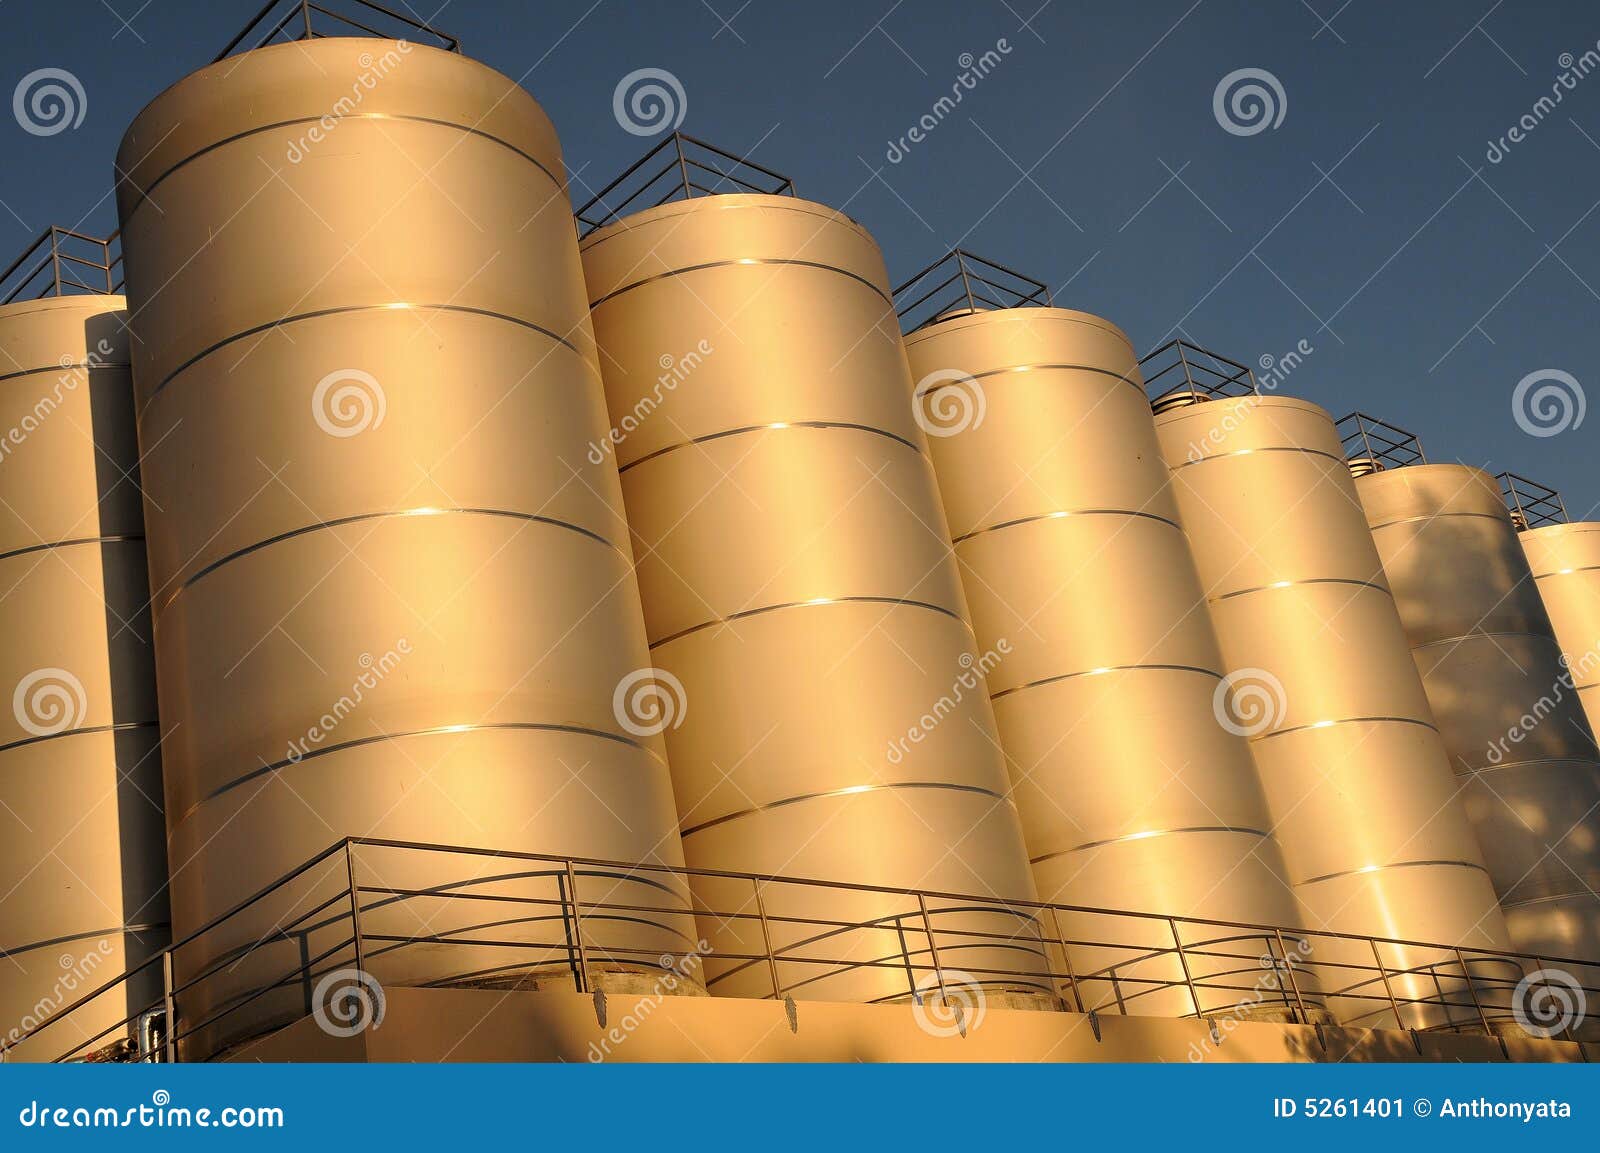 brewery storage tanks